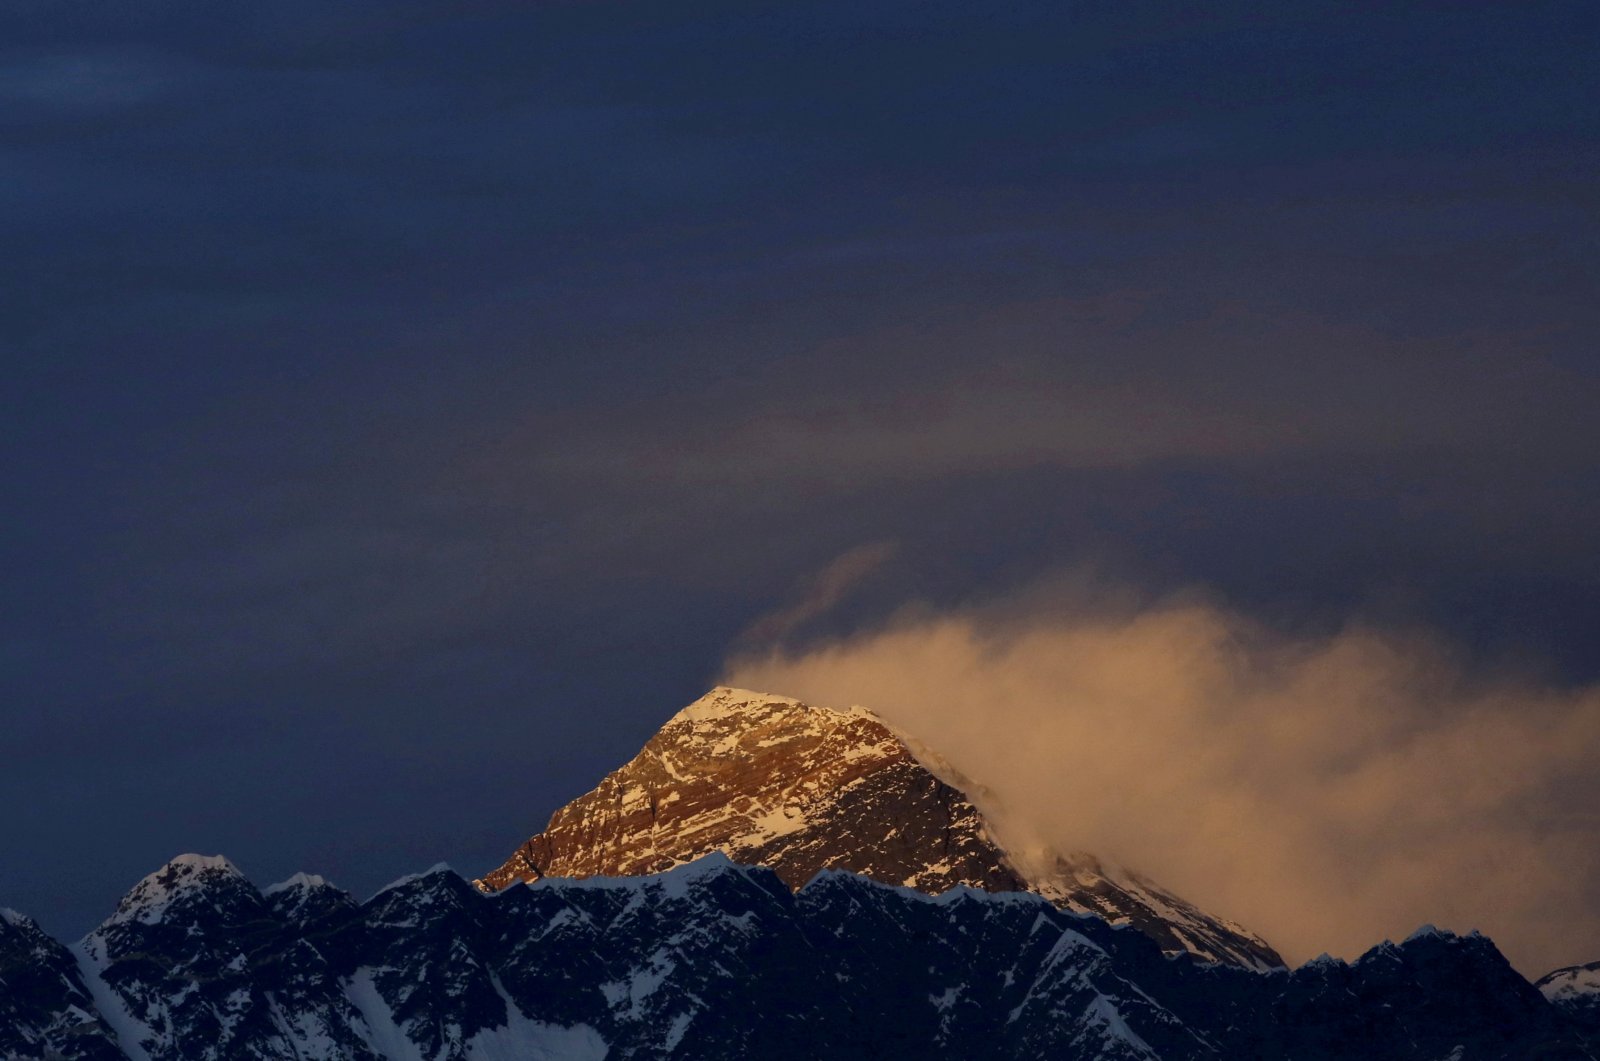 FILE PHOTO: Light illuminates Mount Everest, during sunset in Solukhumbu District also known as the Everest region, November 30, 2015. REUTERS/Navesh Chitrakar/File Photo